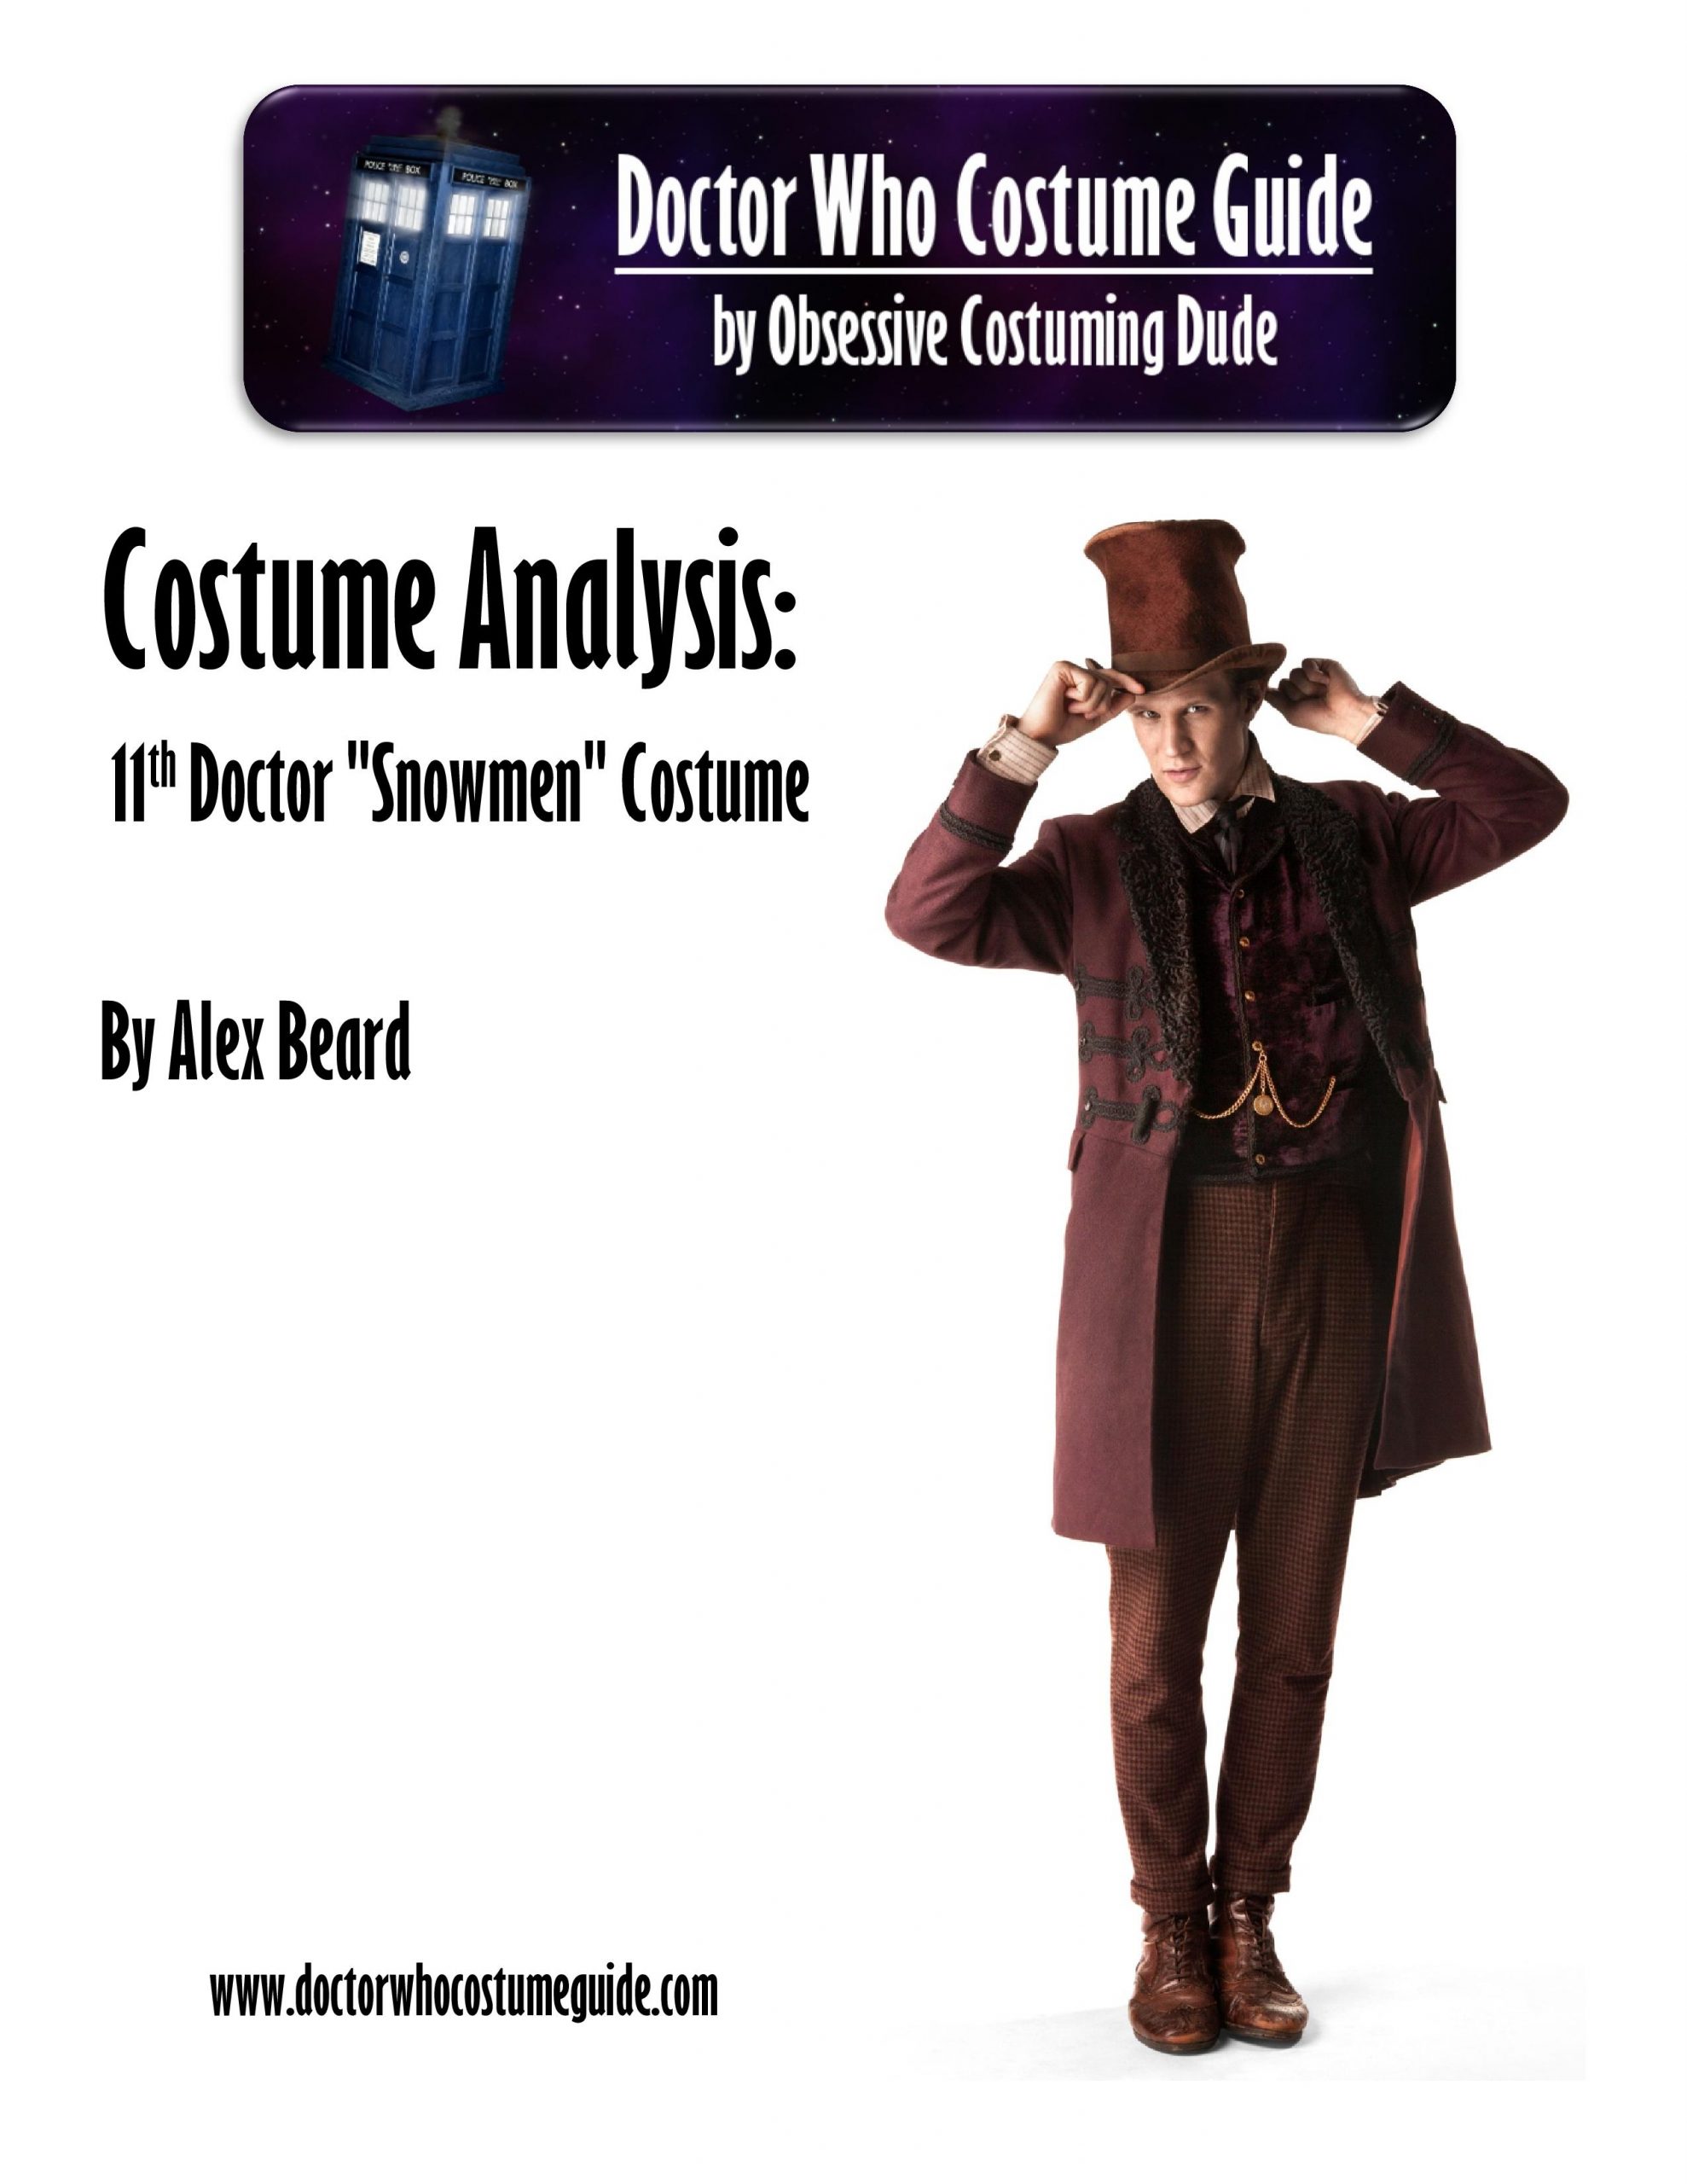 11th Doctor "Snowmen" costume analysis